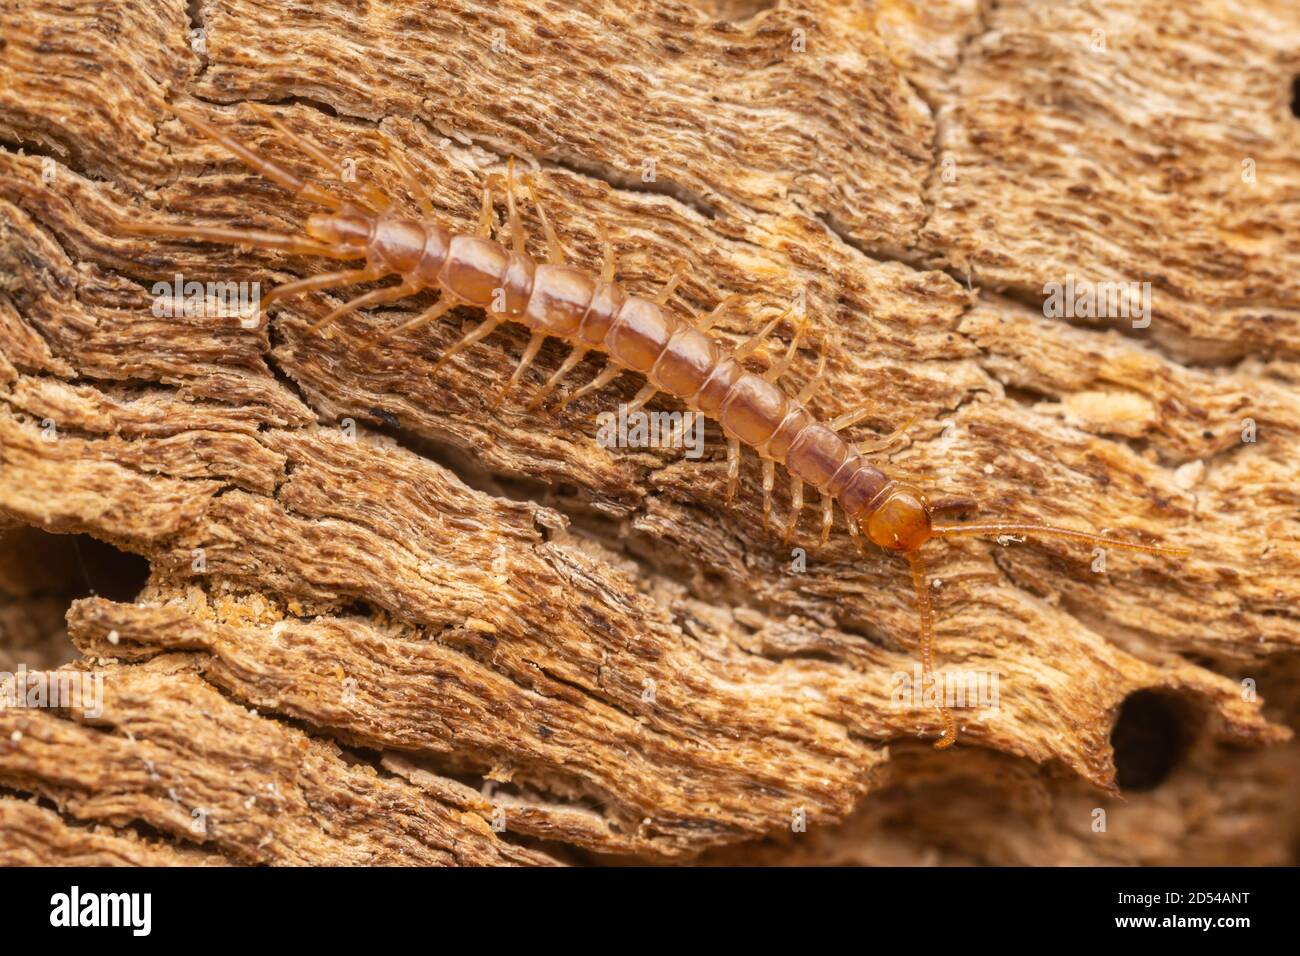 Brown Centipede (Lithobius forficatus) Stock Photo